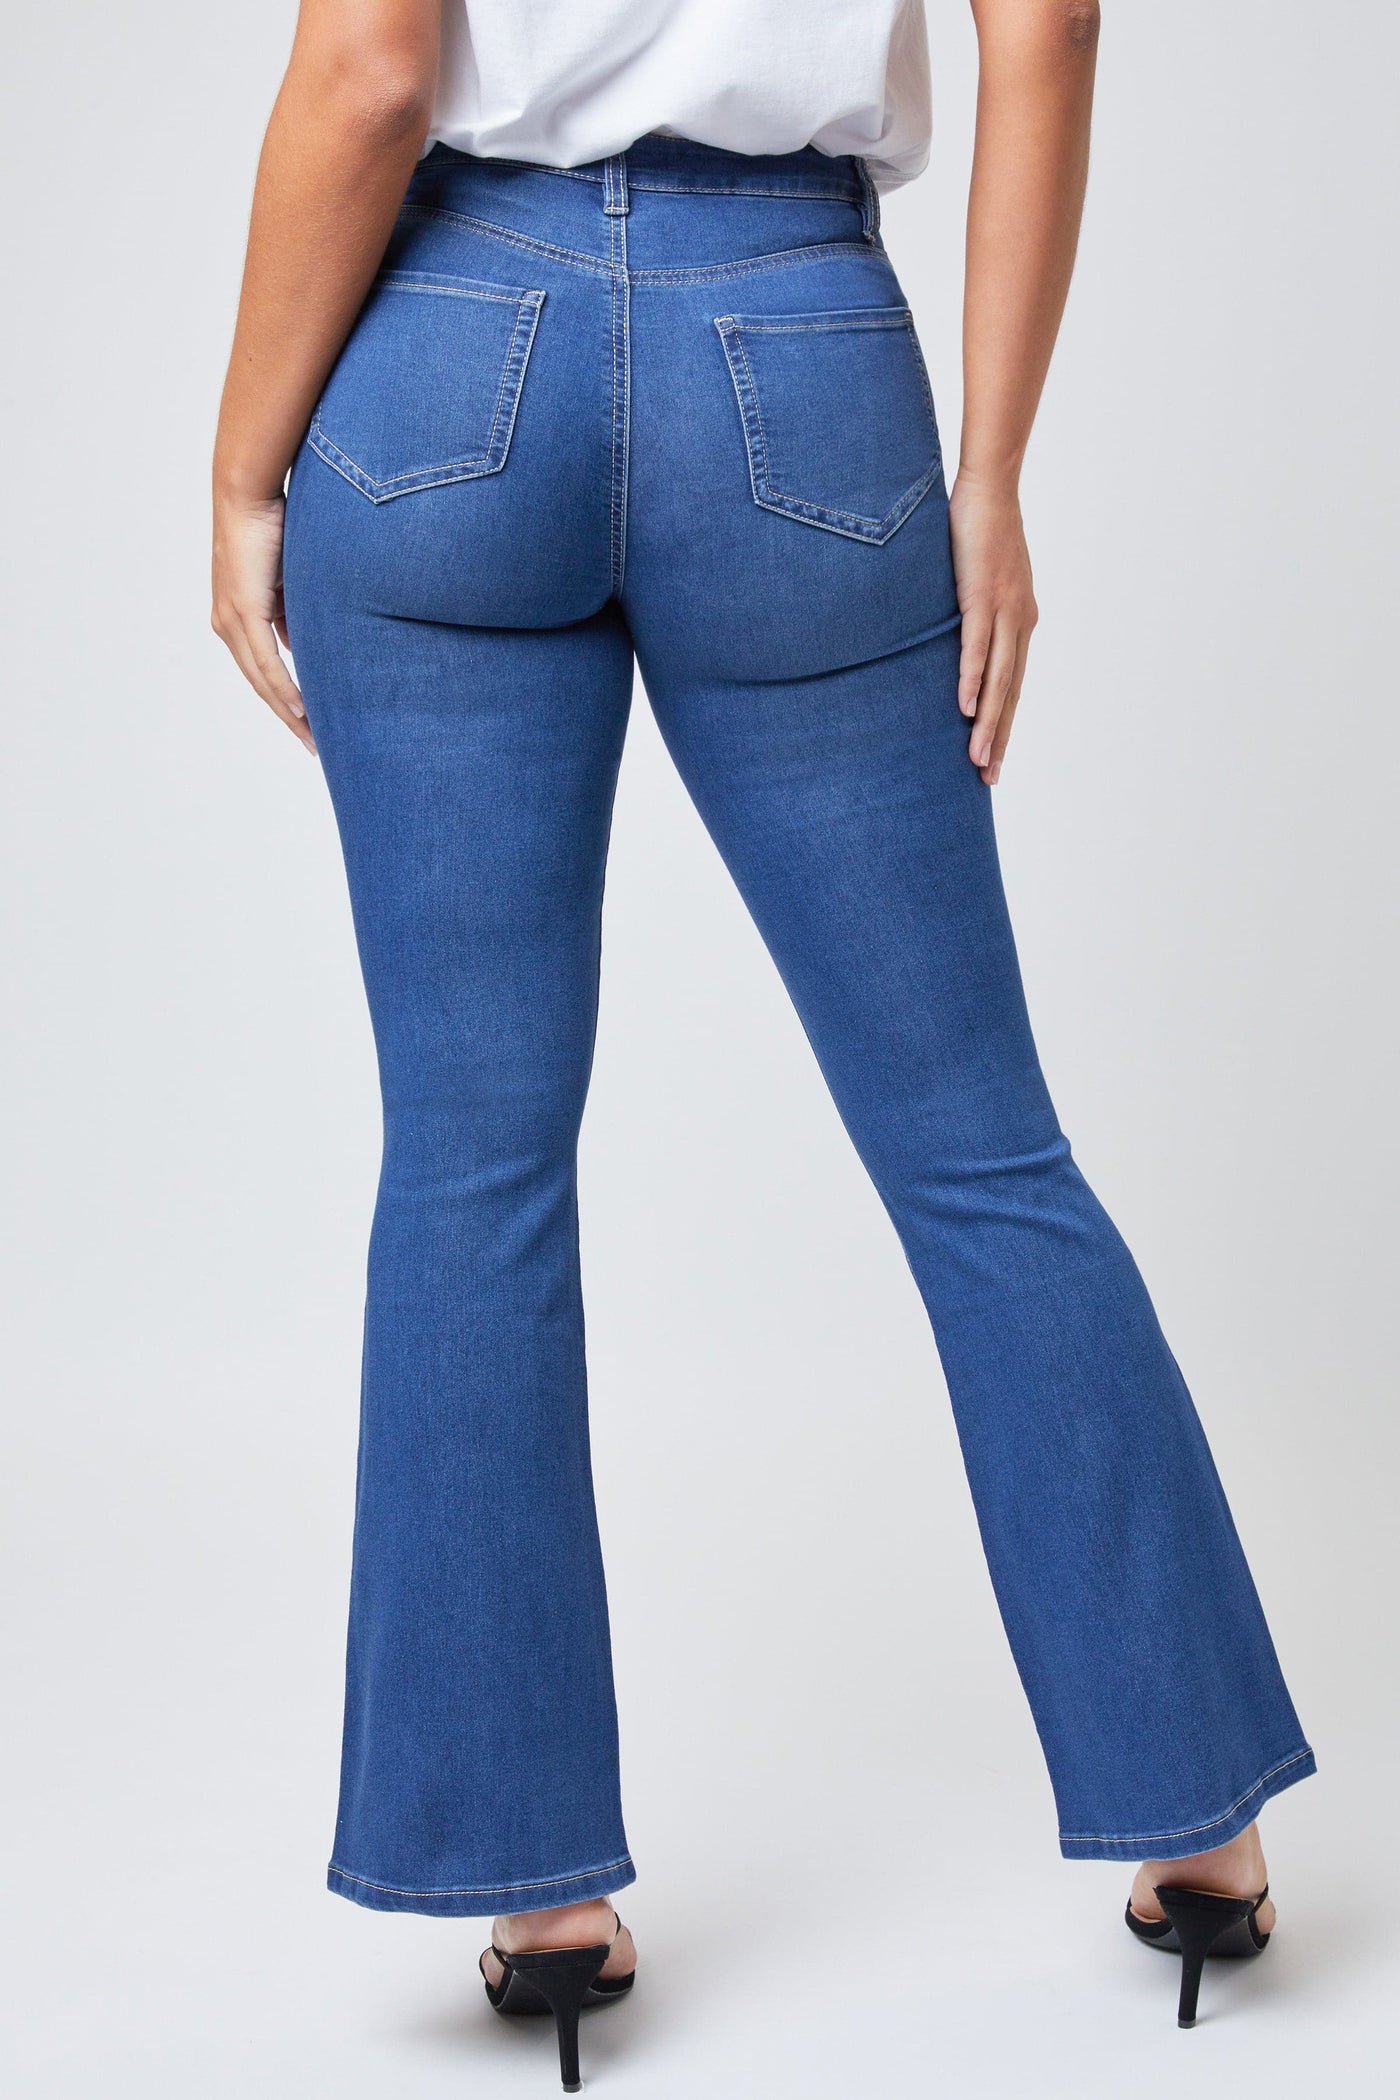 Women's Essential Hyperdenim  Flare Jeans - Long & Regular Inseam